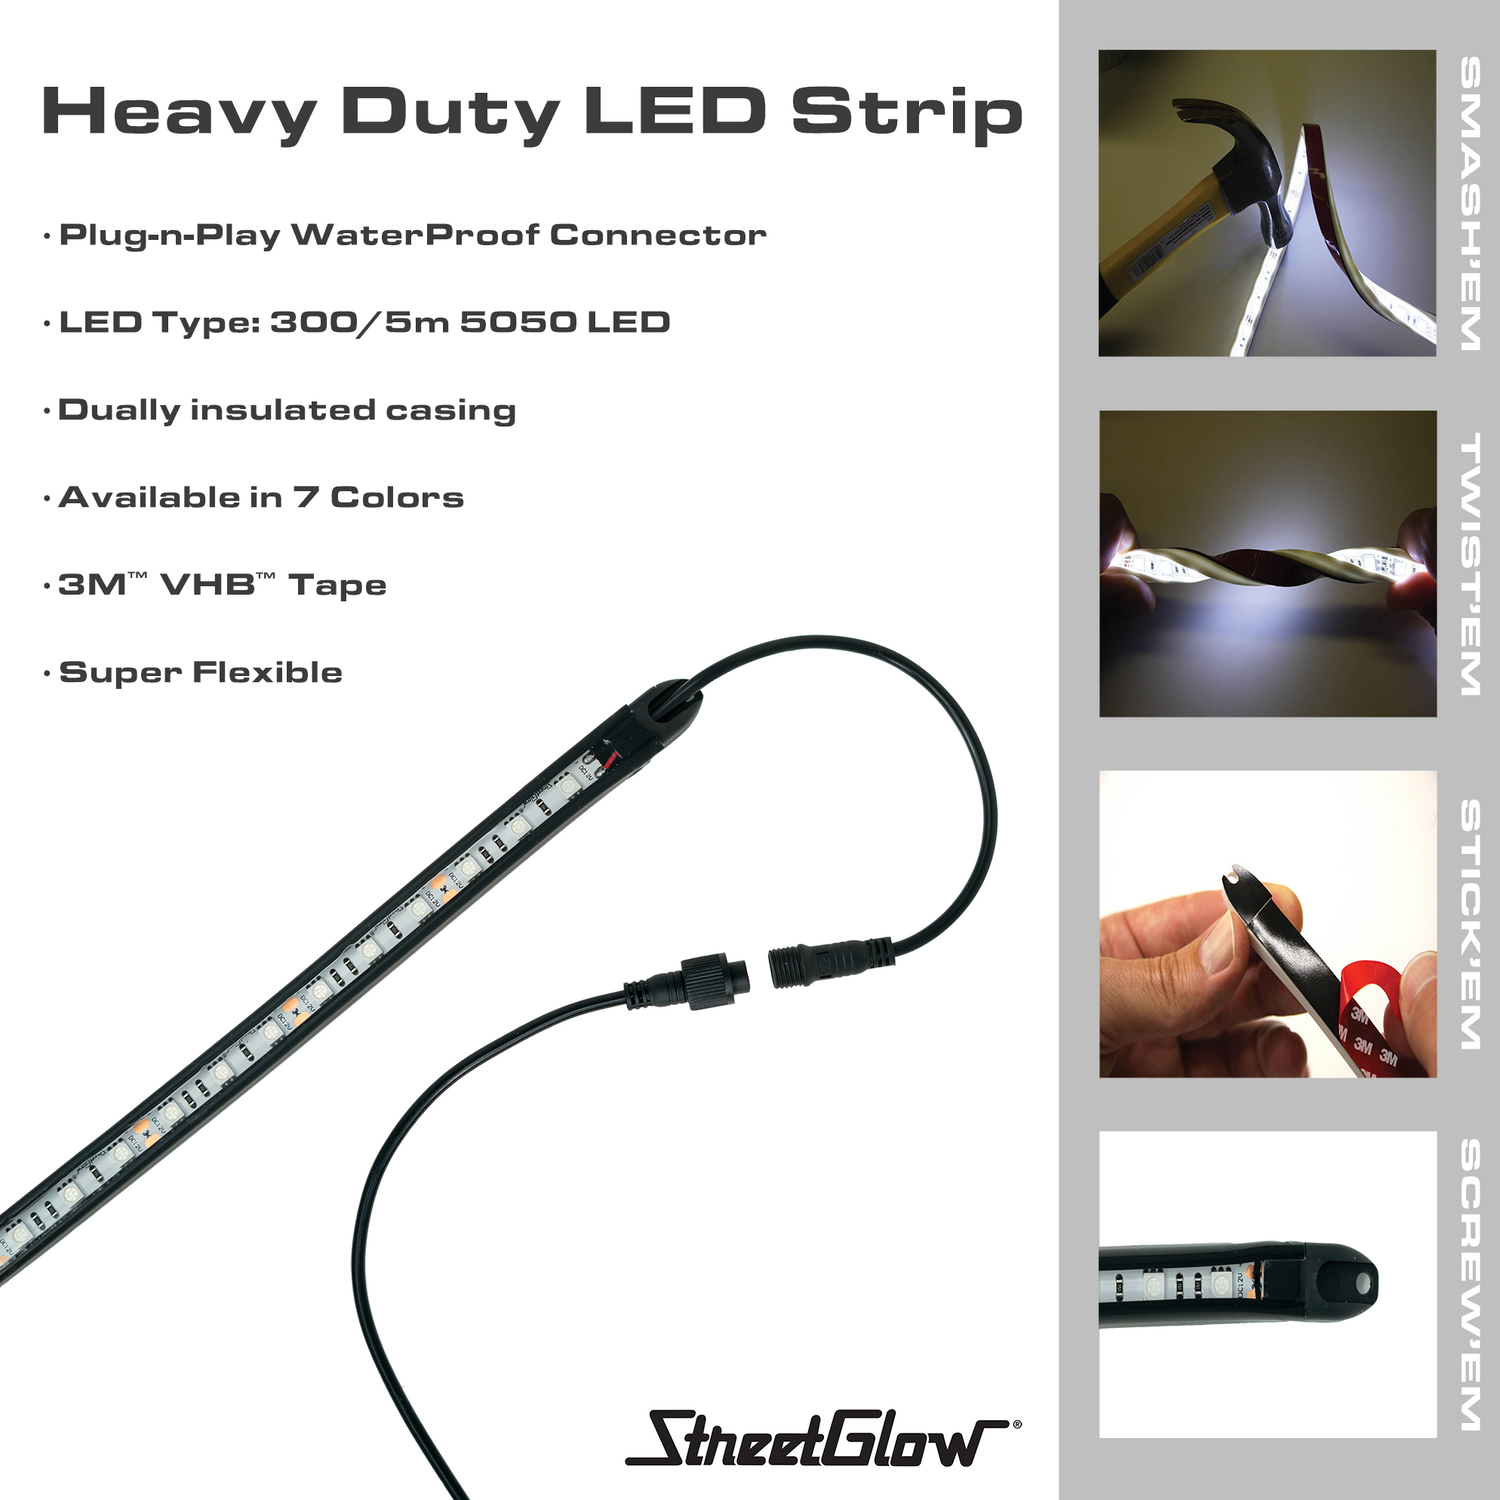 Streetglow Hd24am Amber 24 Heavy Duty LED Strip